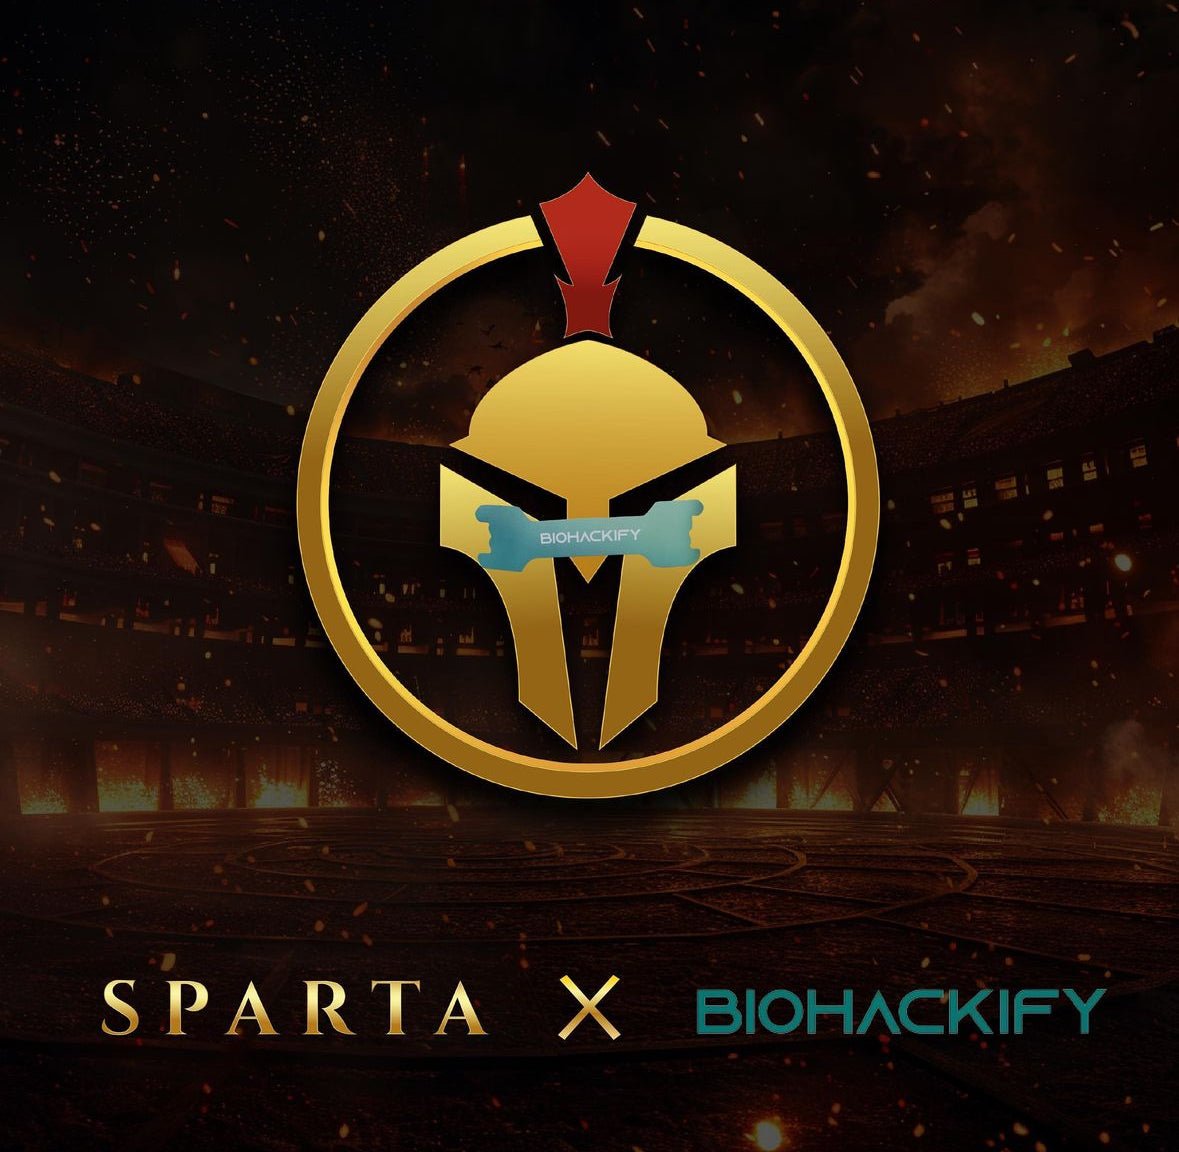 SPARTA x BIOHACKIFY RABATT PACKAGE - Bio Hackify